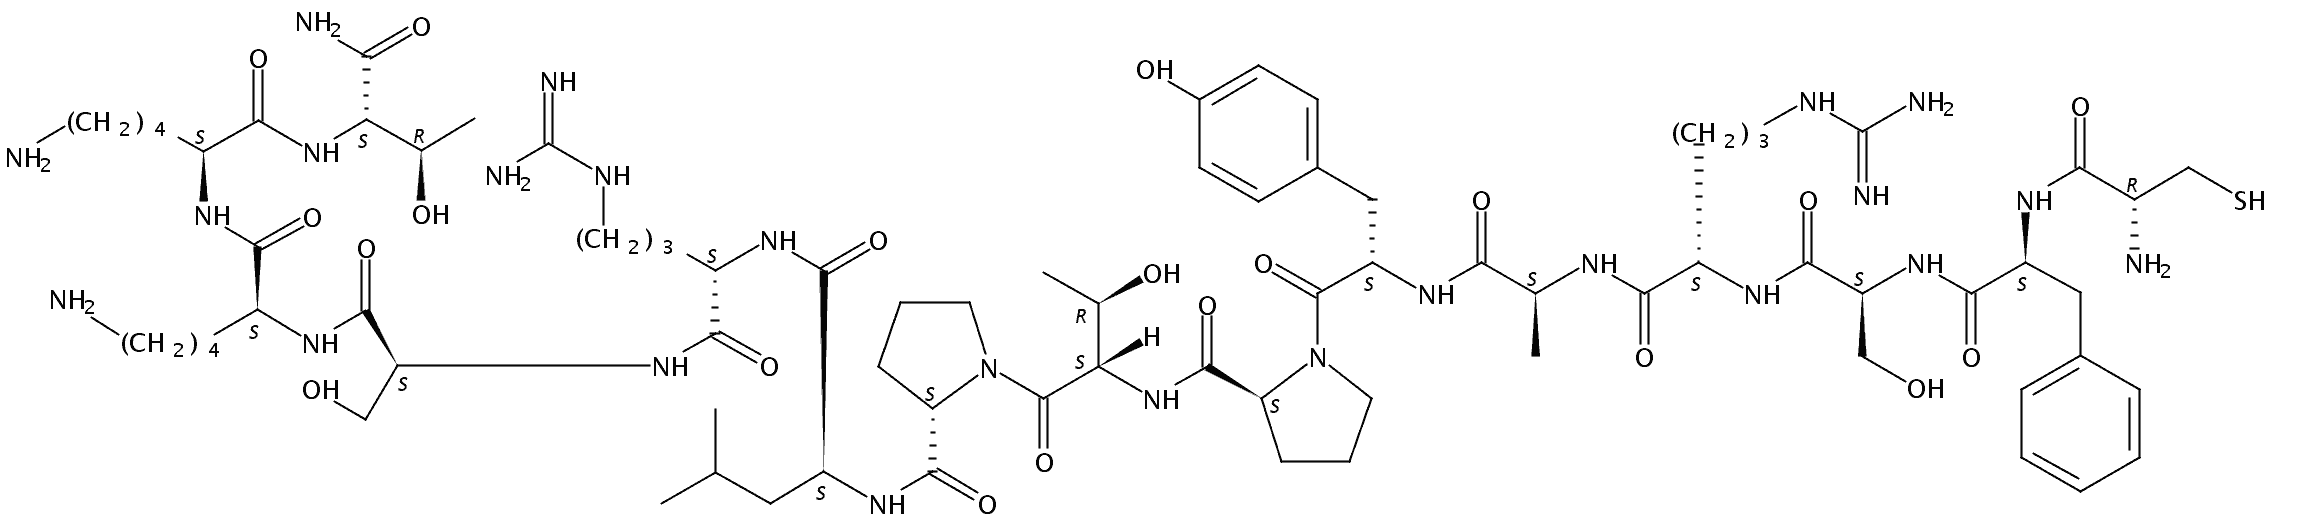 Glycoprotein Hormone α (32-46) amide